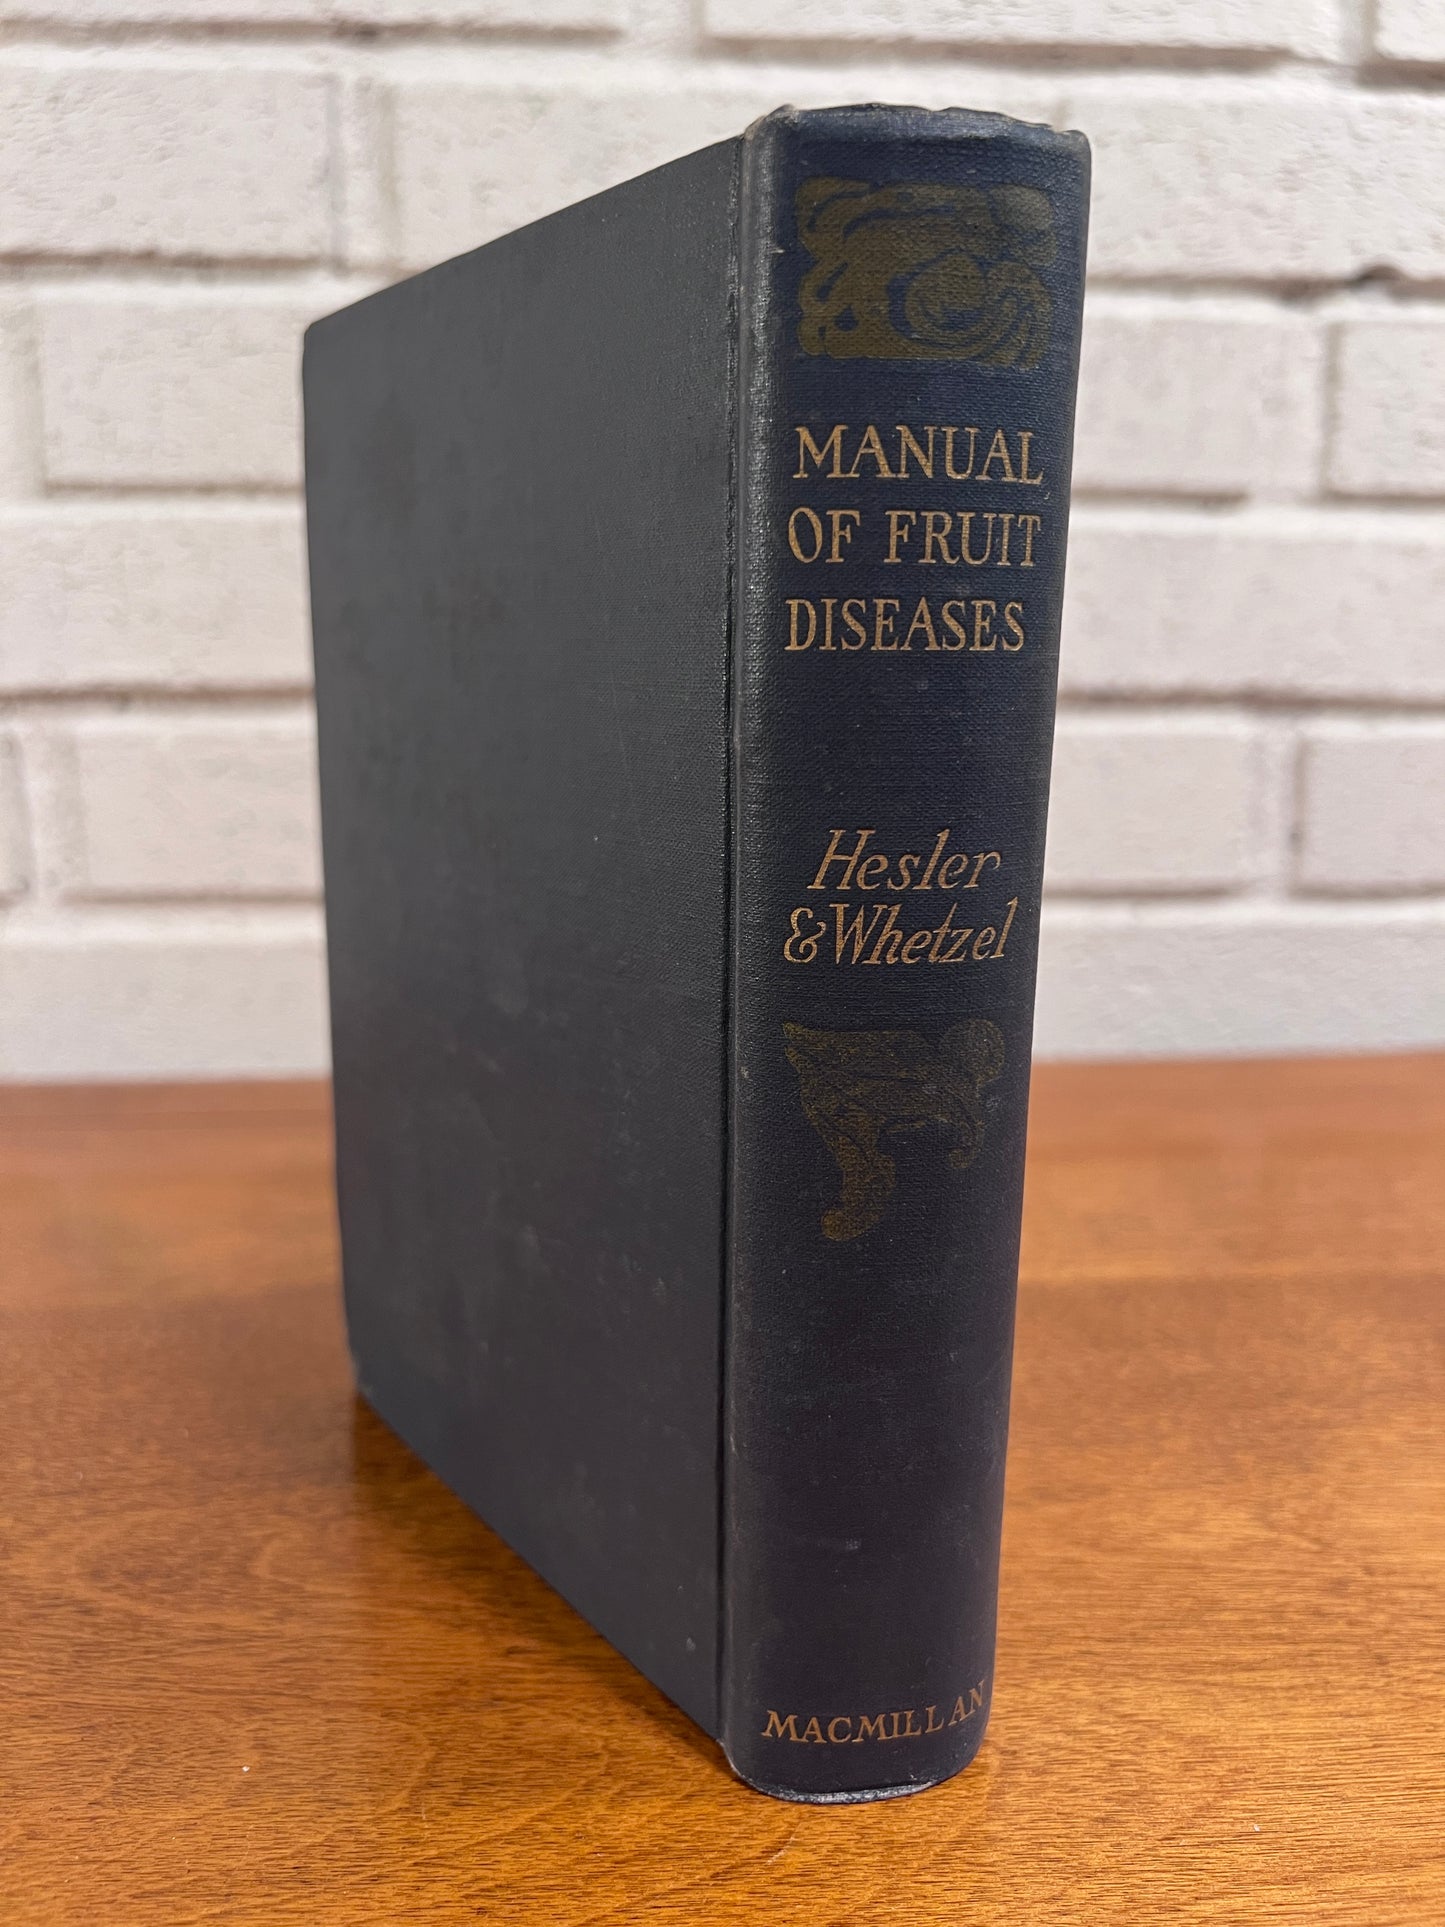 Manual of Fruit Diseases by Hesler & Whetzel 1917